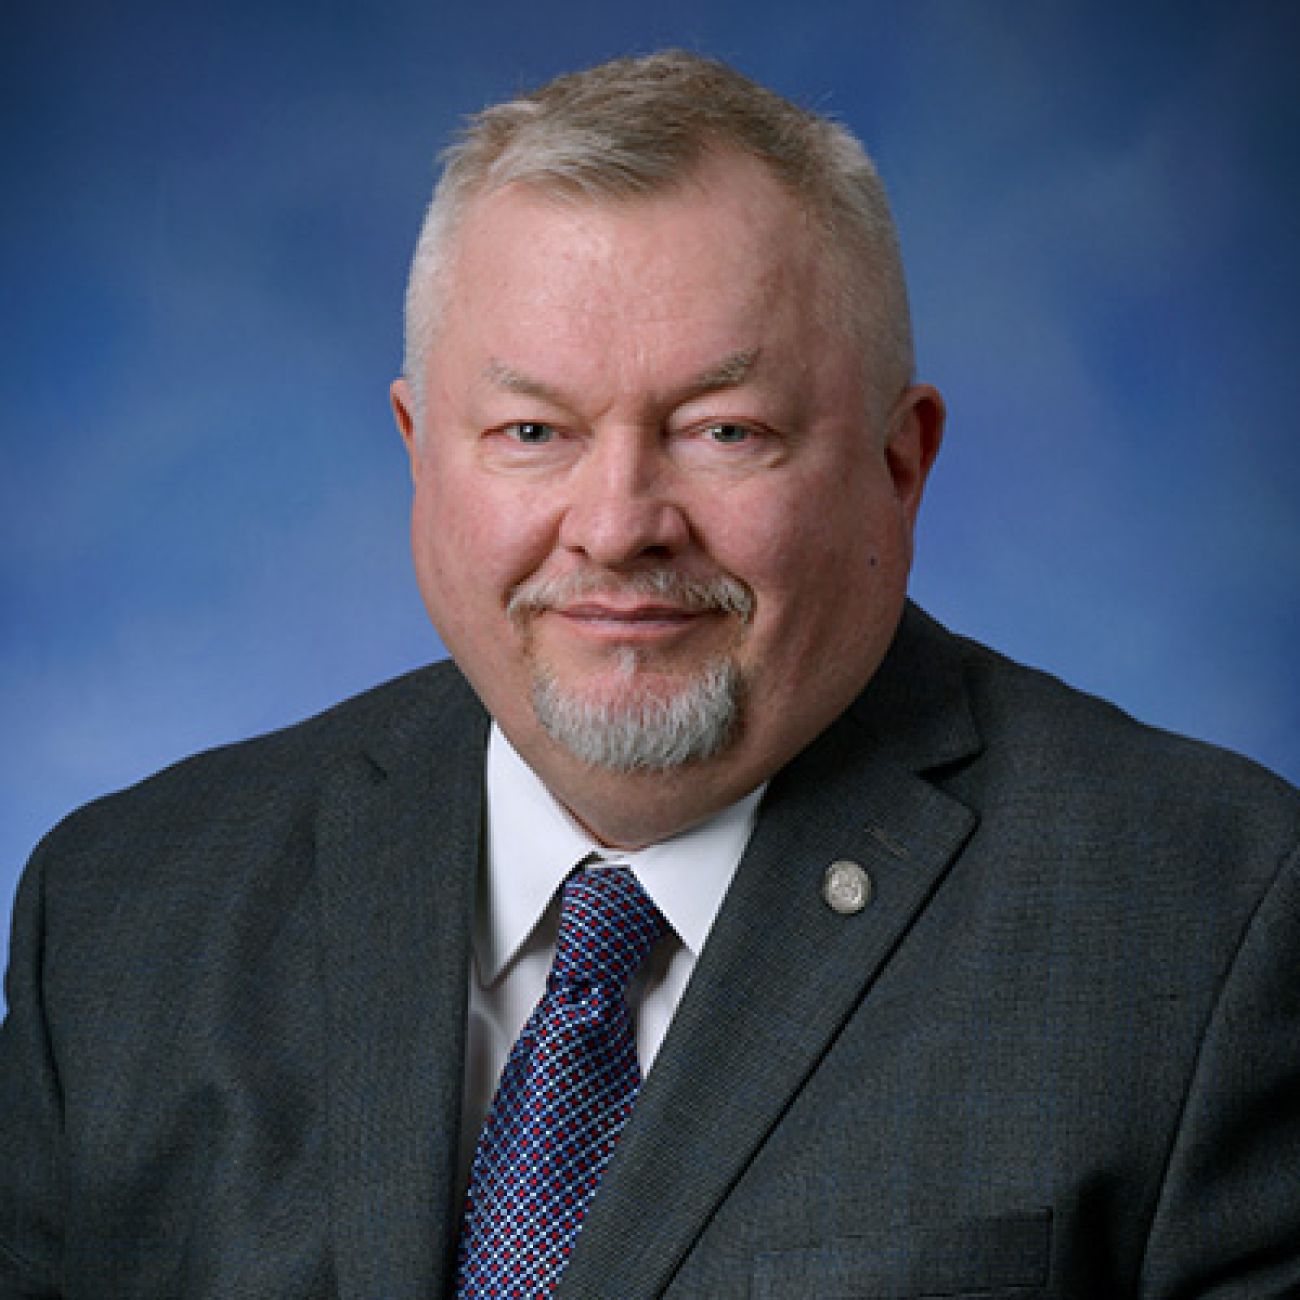 State Rep. Greg Markkanen